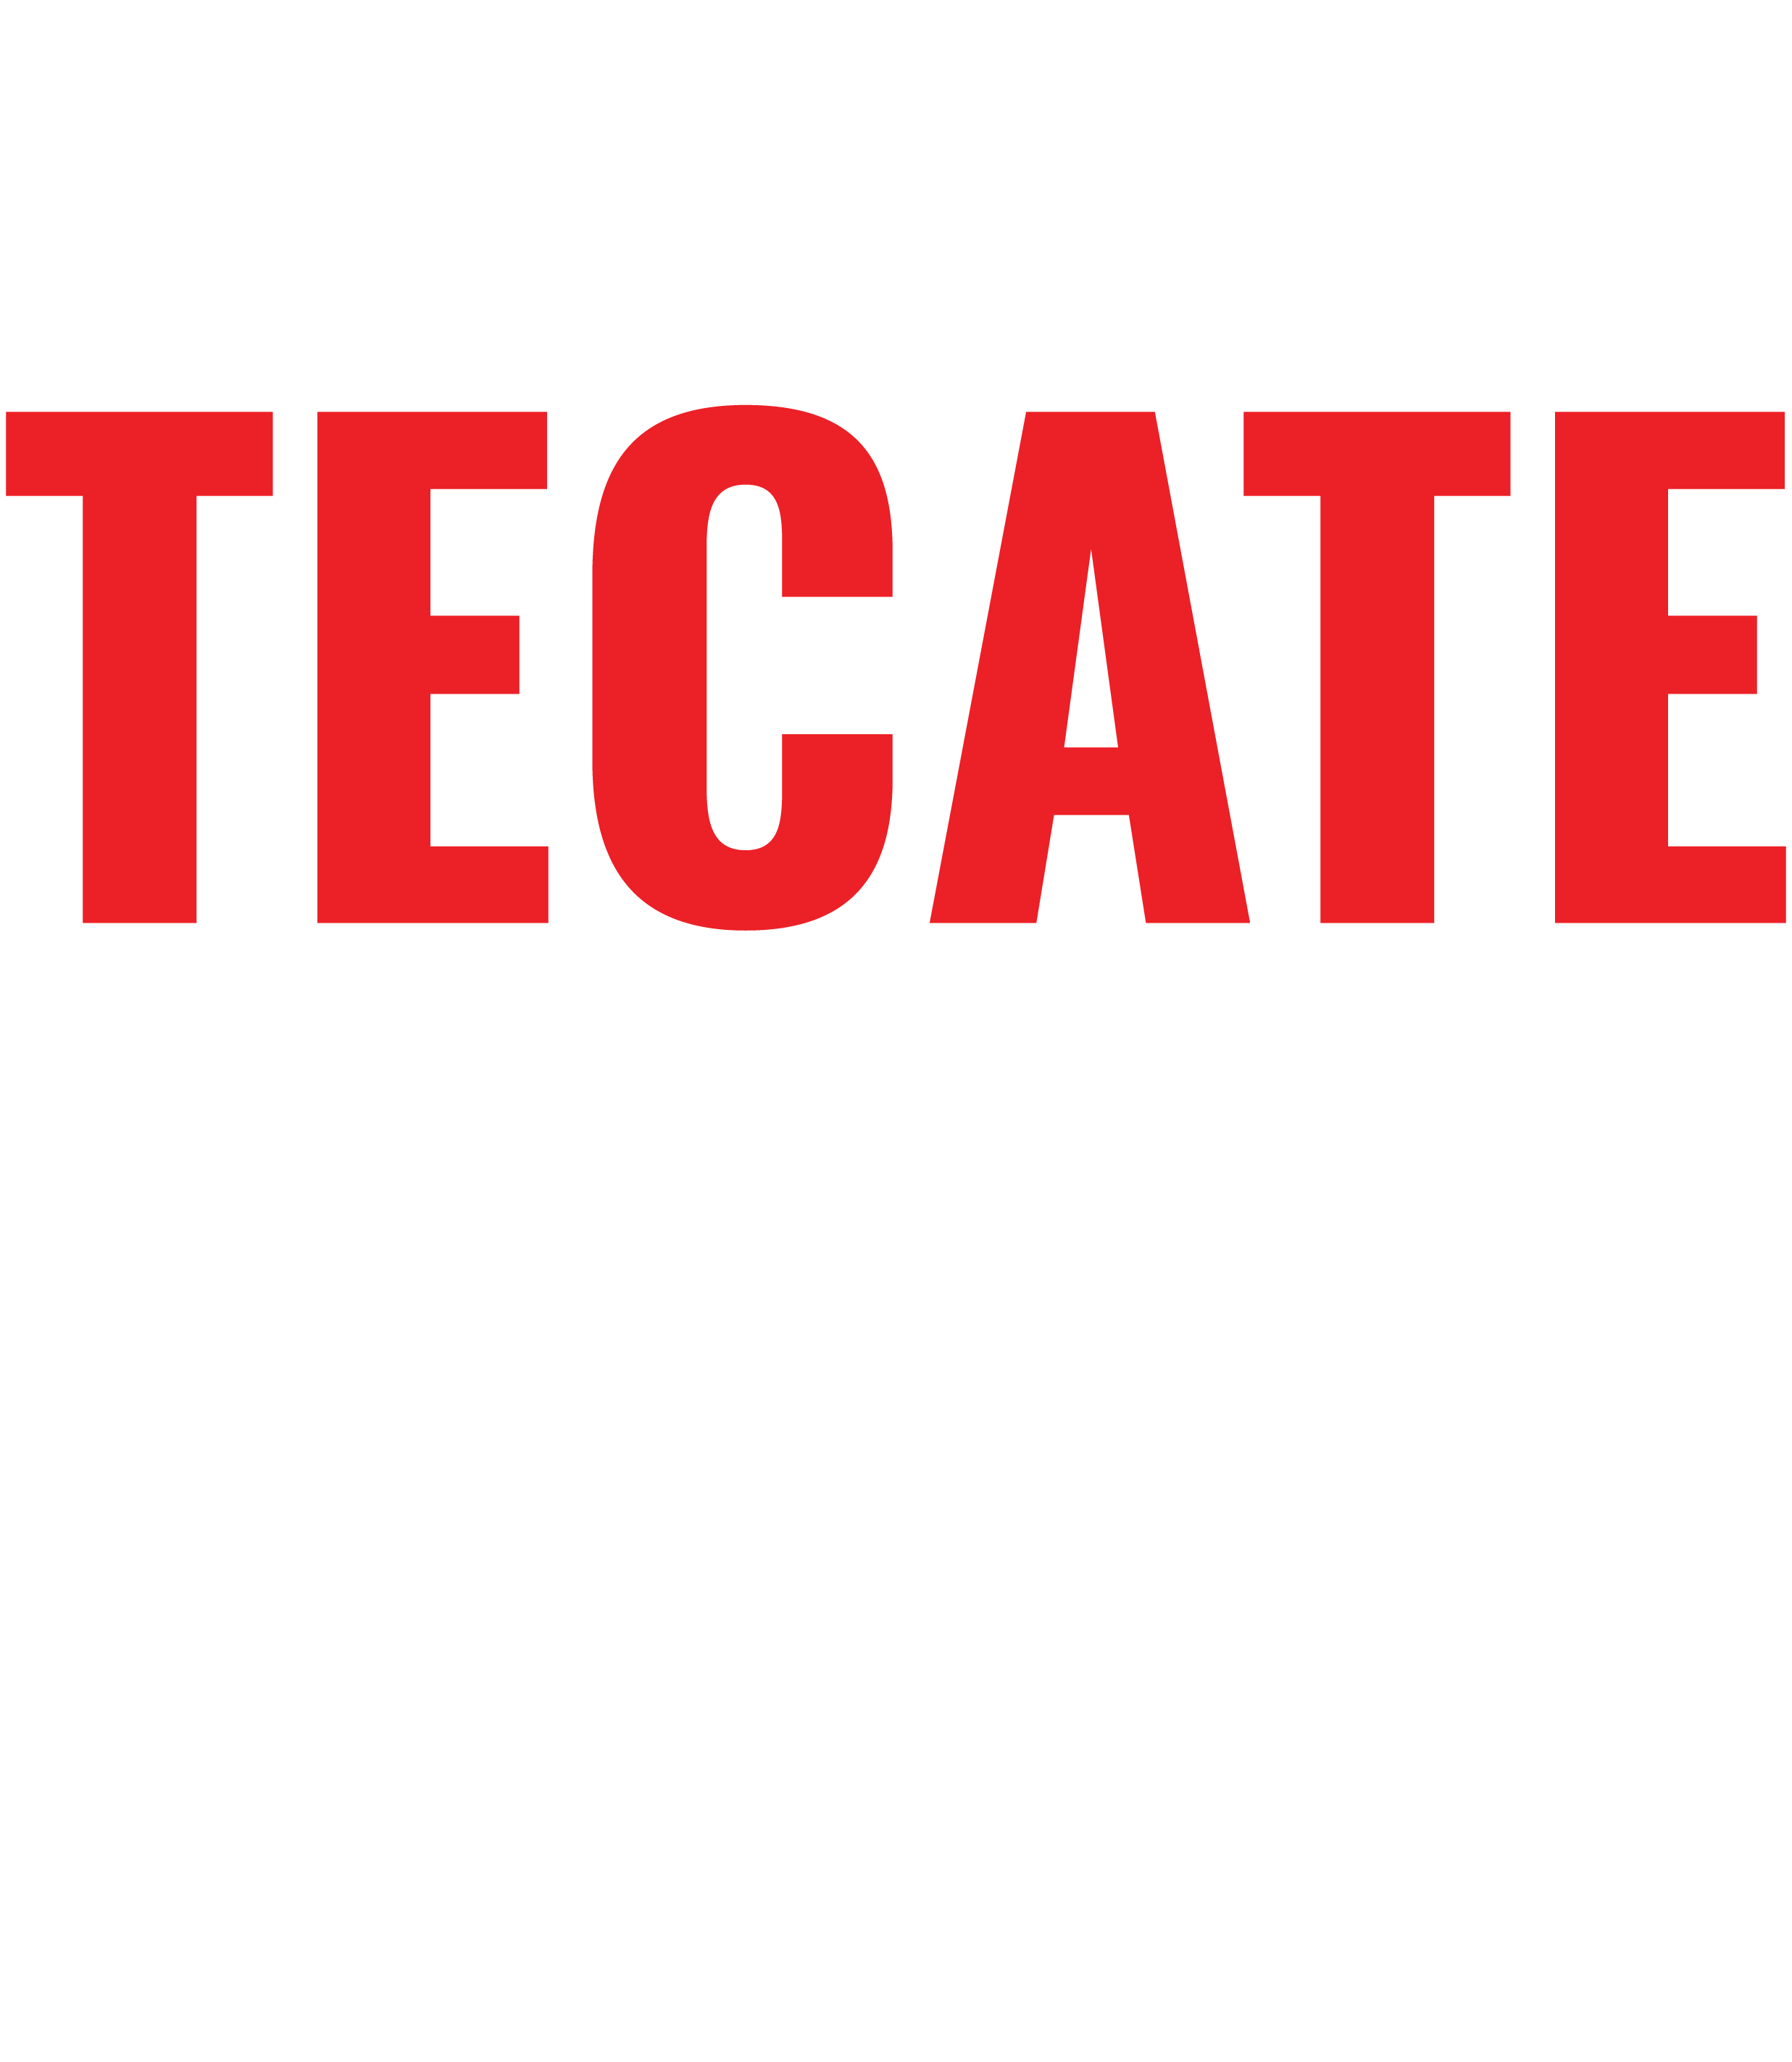 Spanish phrase "Nacida en Tecate Baja California Mexico".